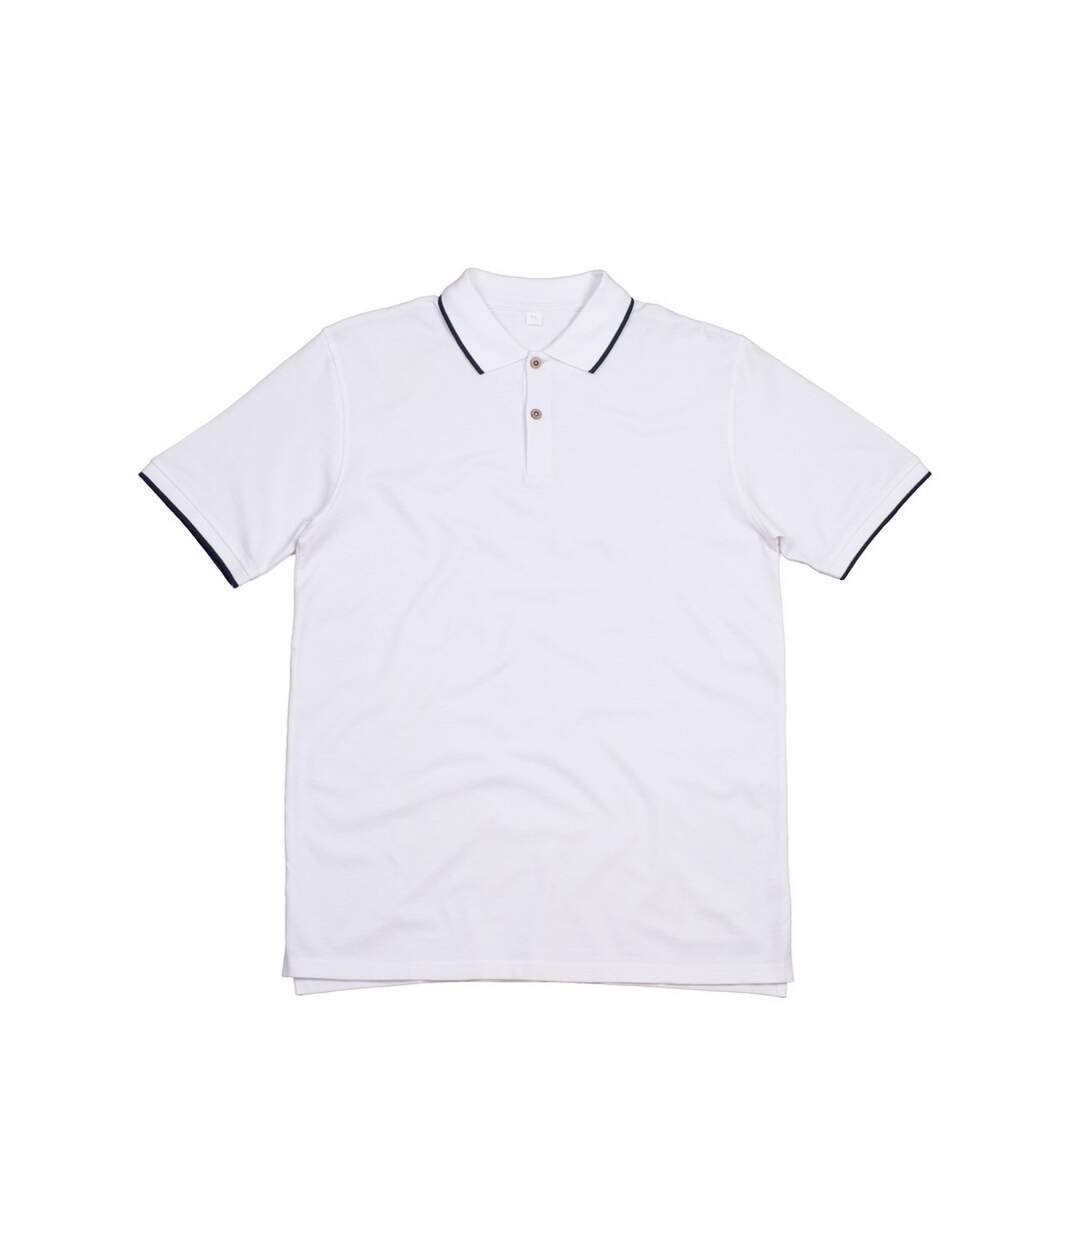 Mantis - T-shirt POLO - Hommes (Blanc / bleu marine) - UTPC3672